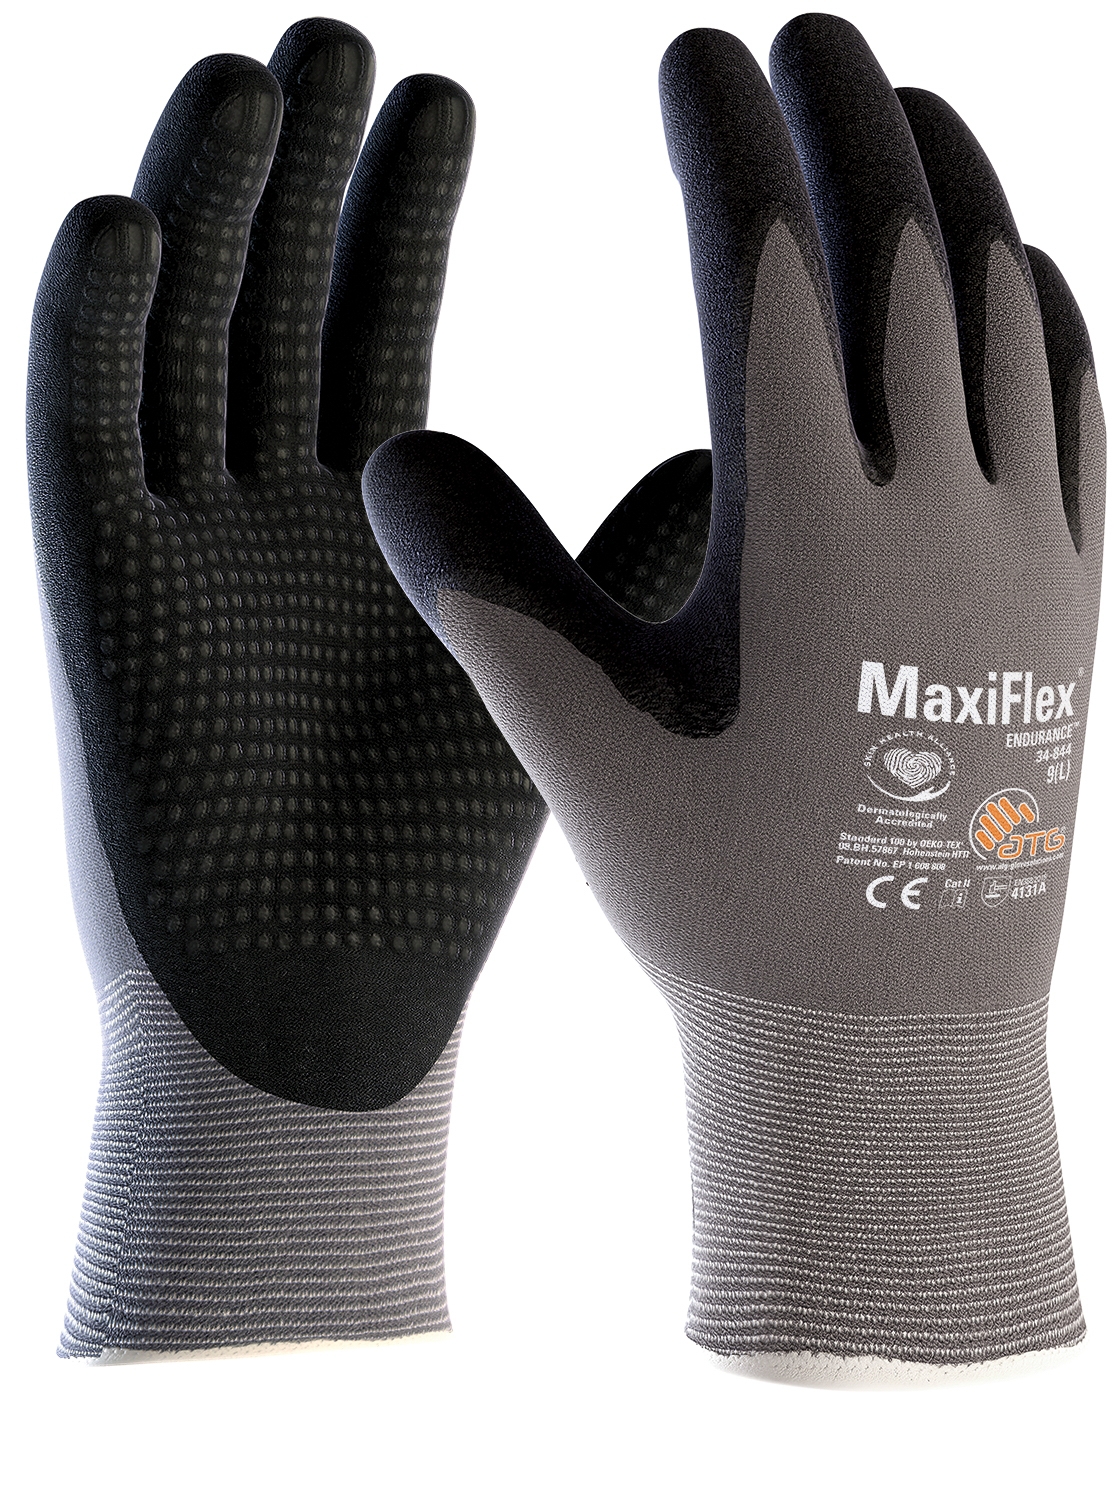 ATG® Nylon-Strickhandschuhe MaxiFlex® Endurance™ (34-844) grau/schwarz